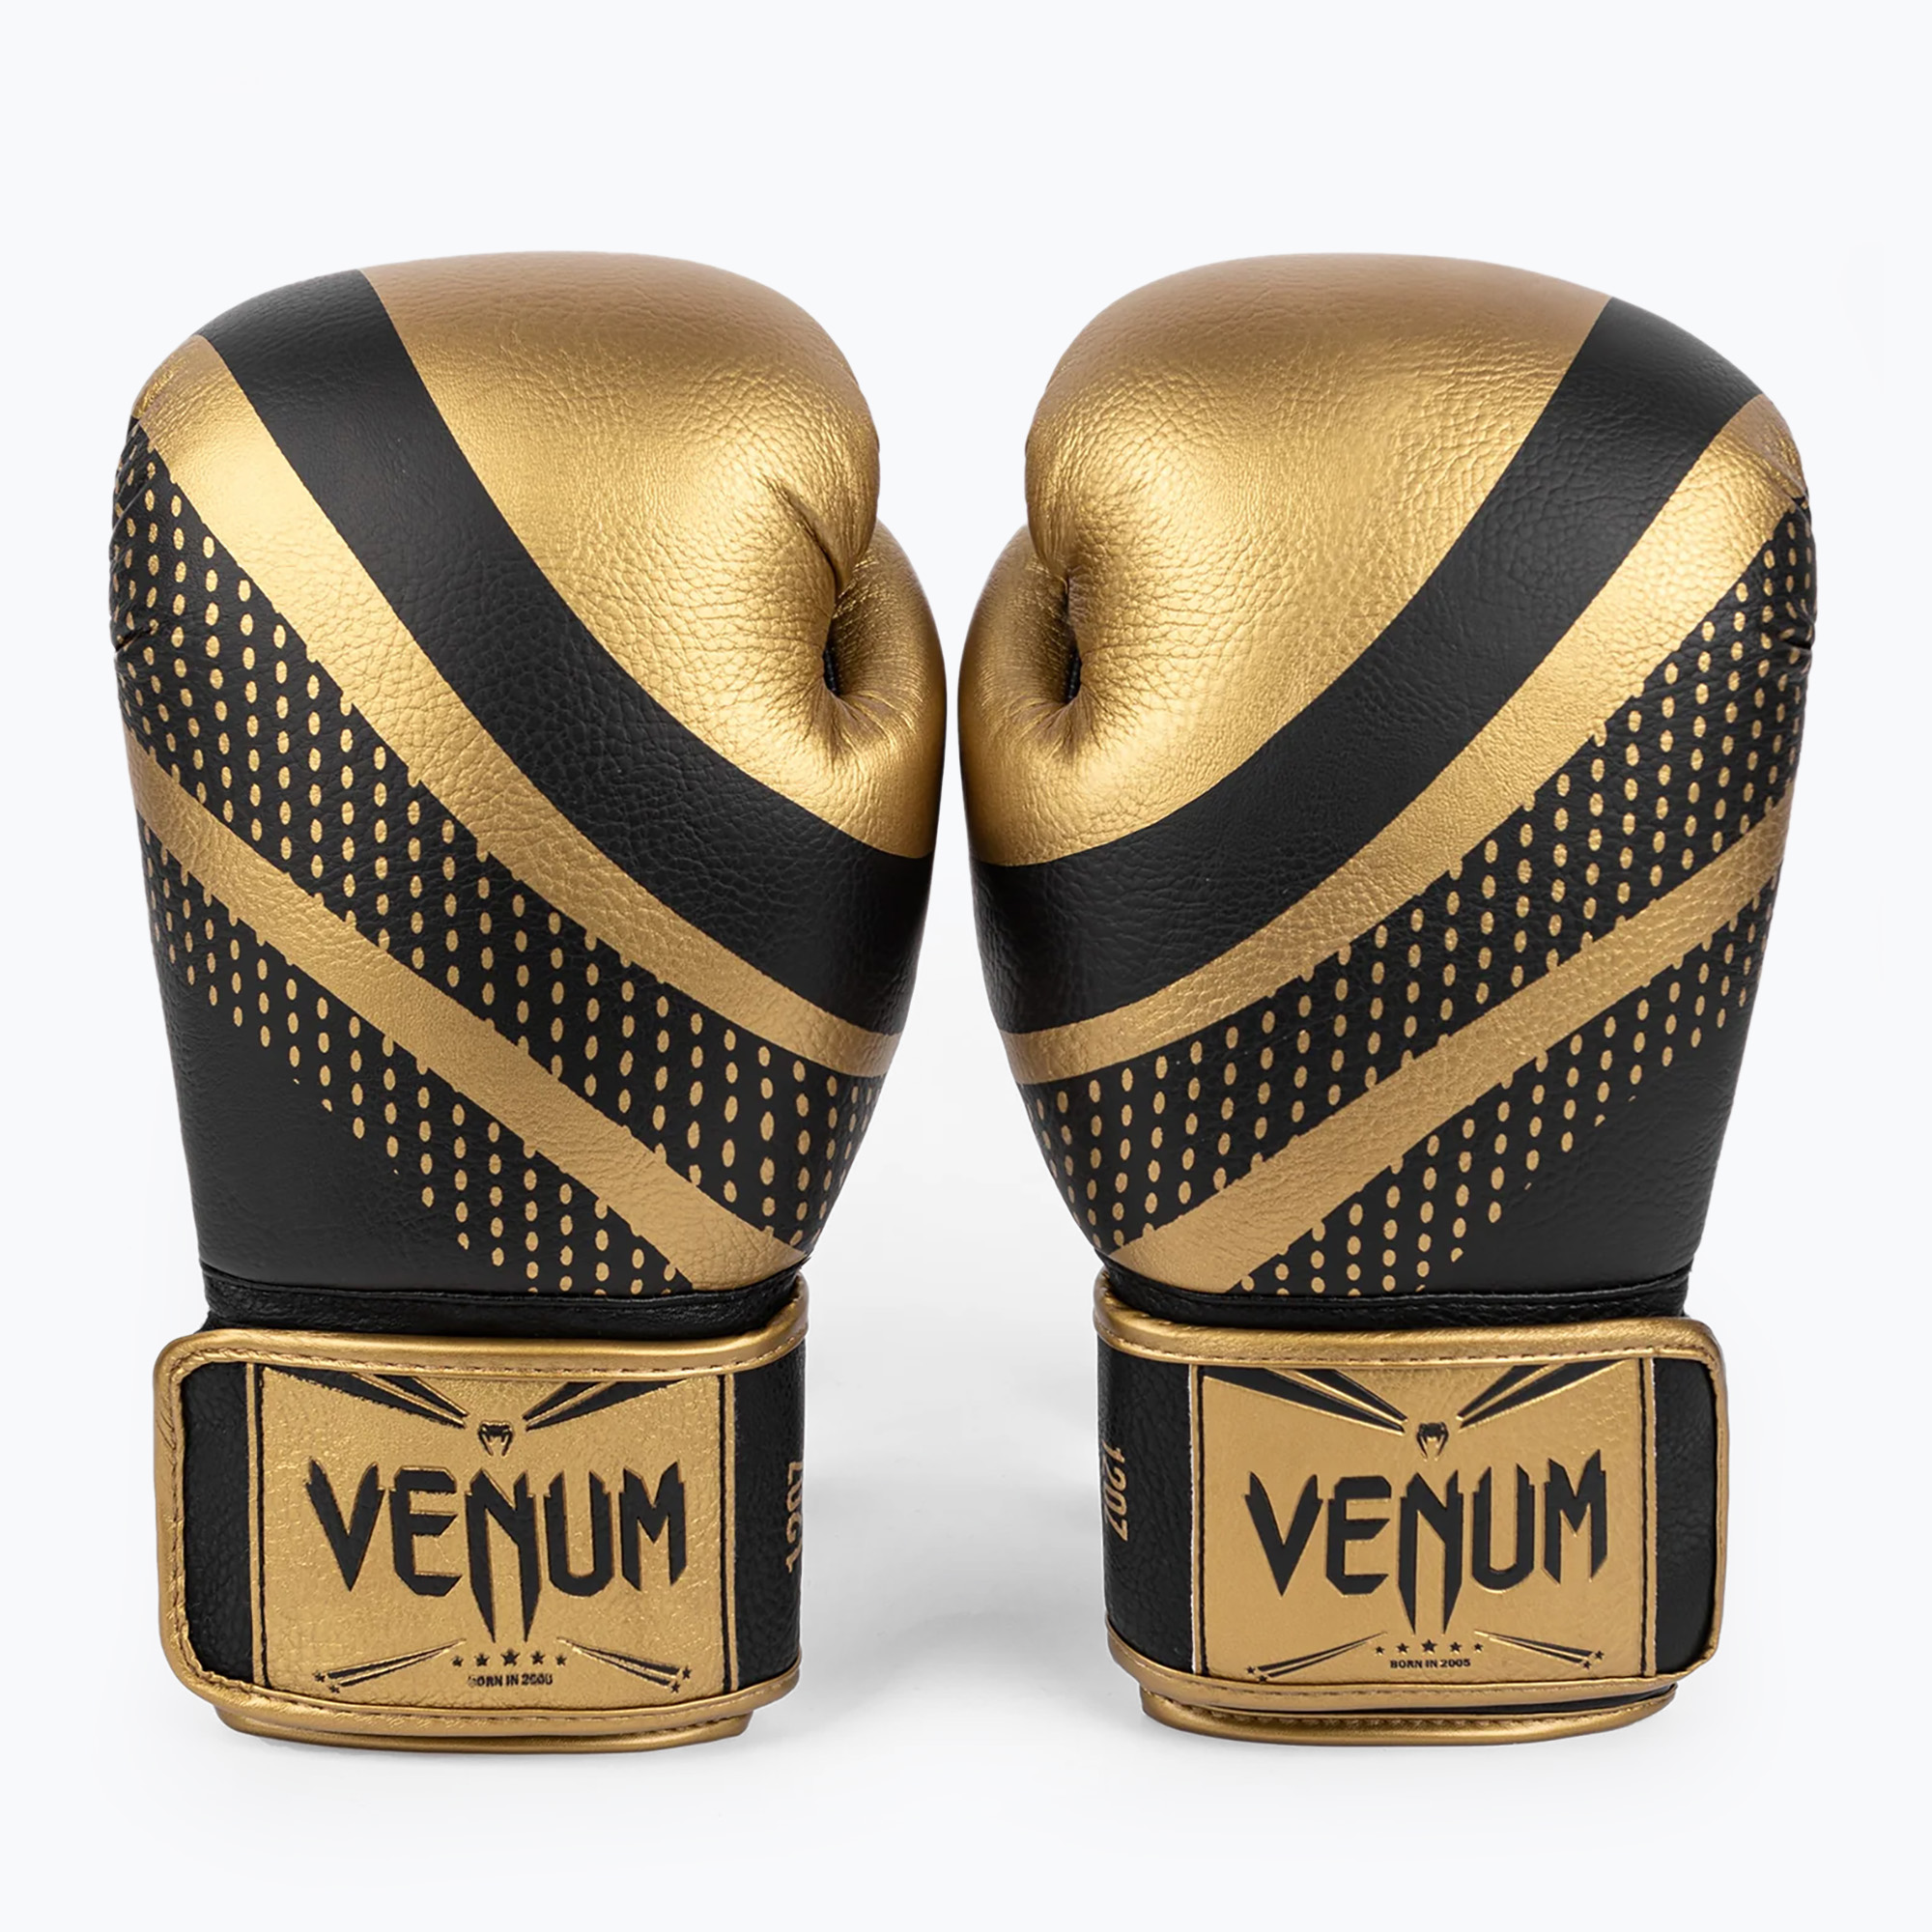 Mănuși de box Venum Lightning Boxing gold/black